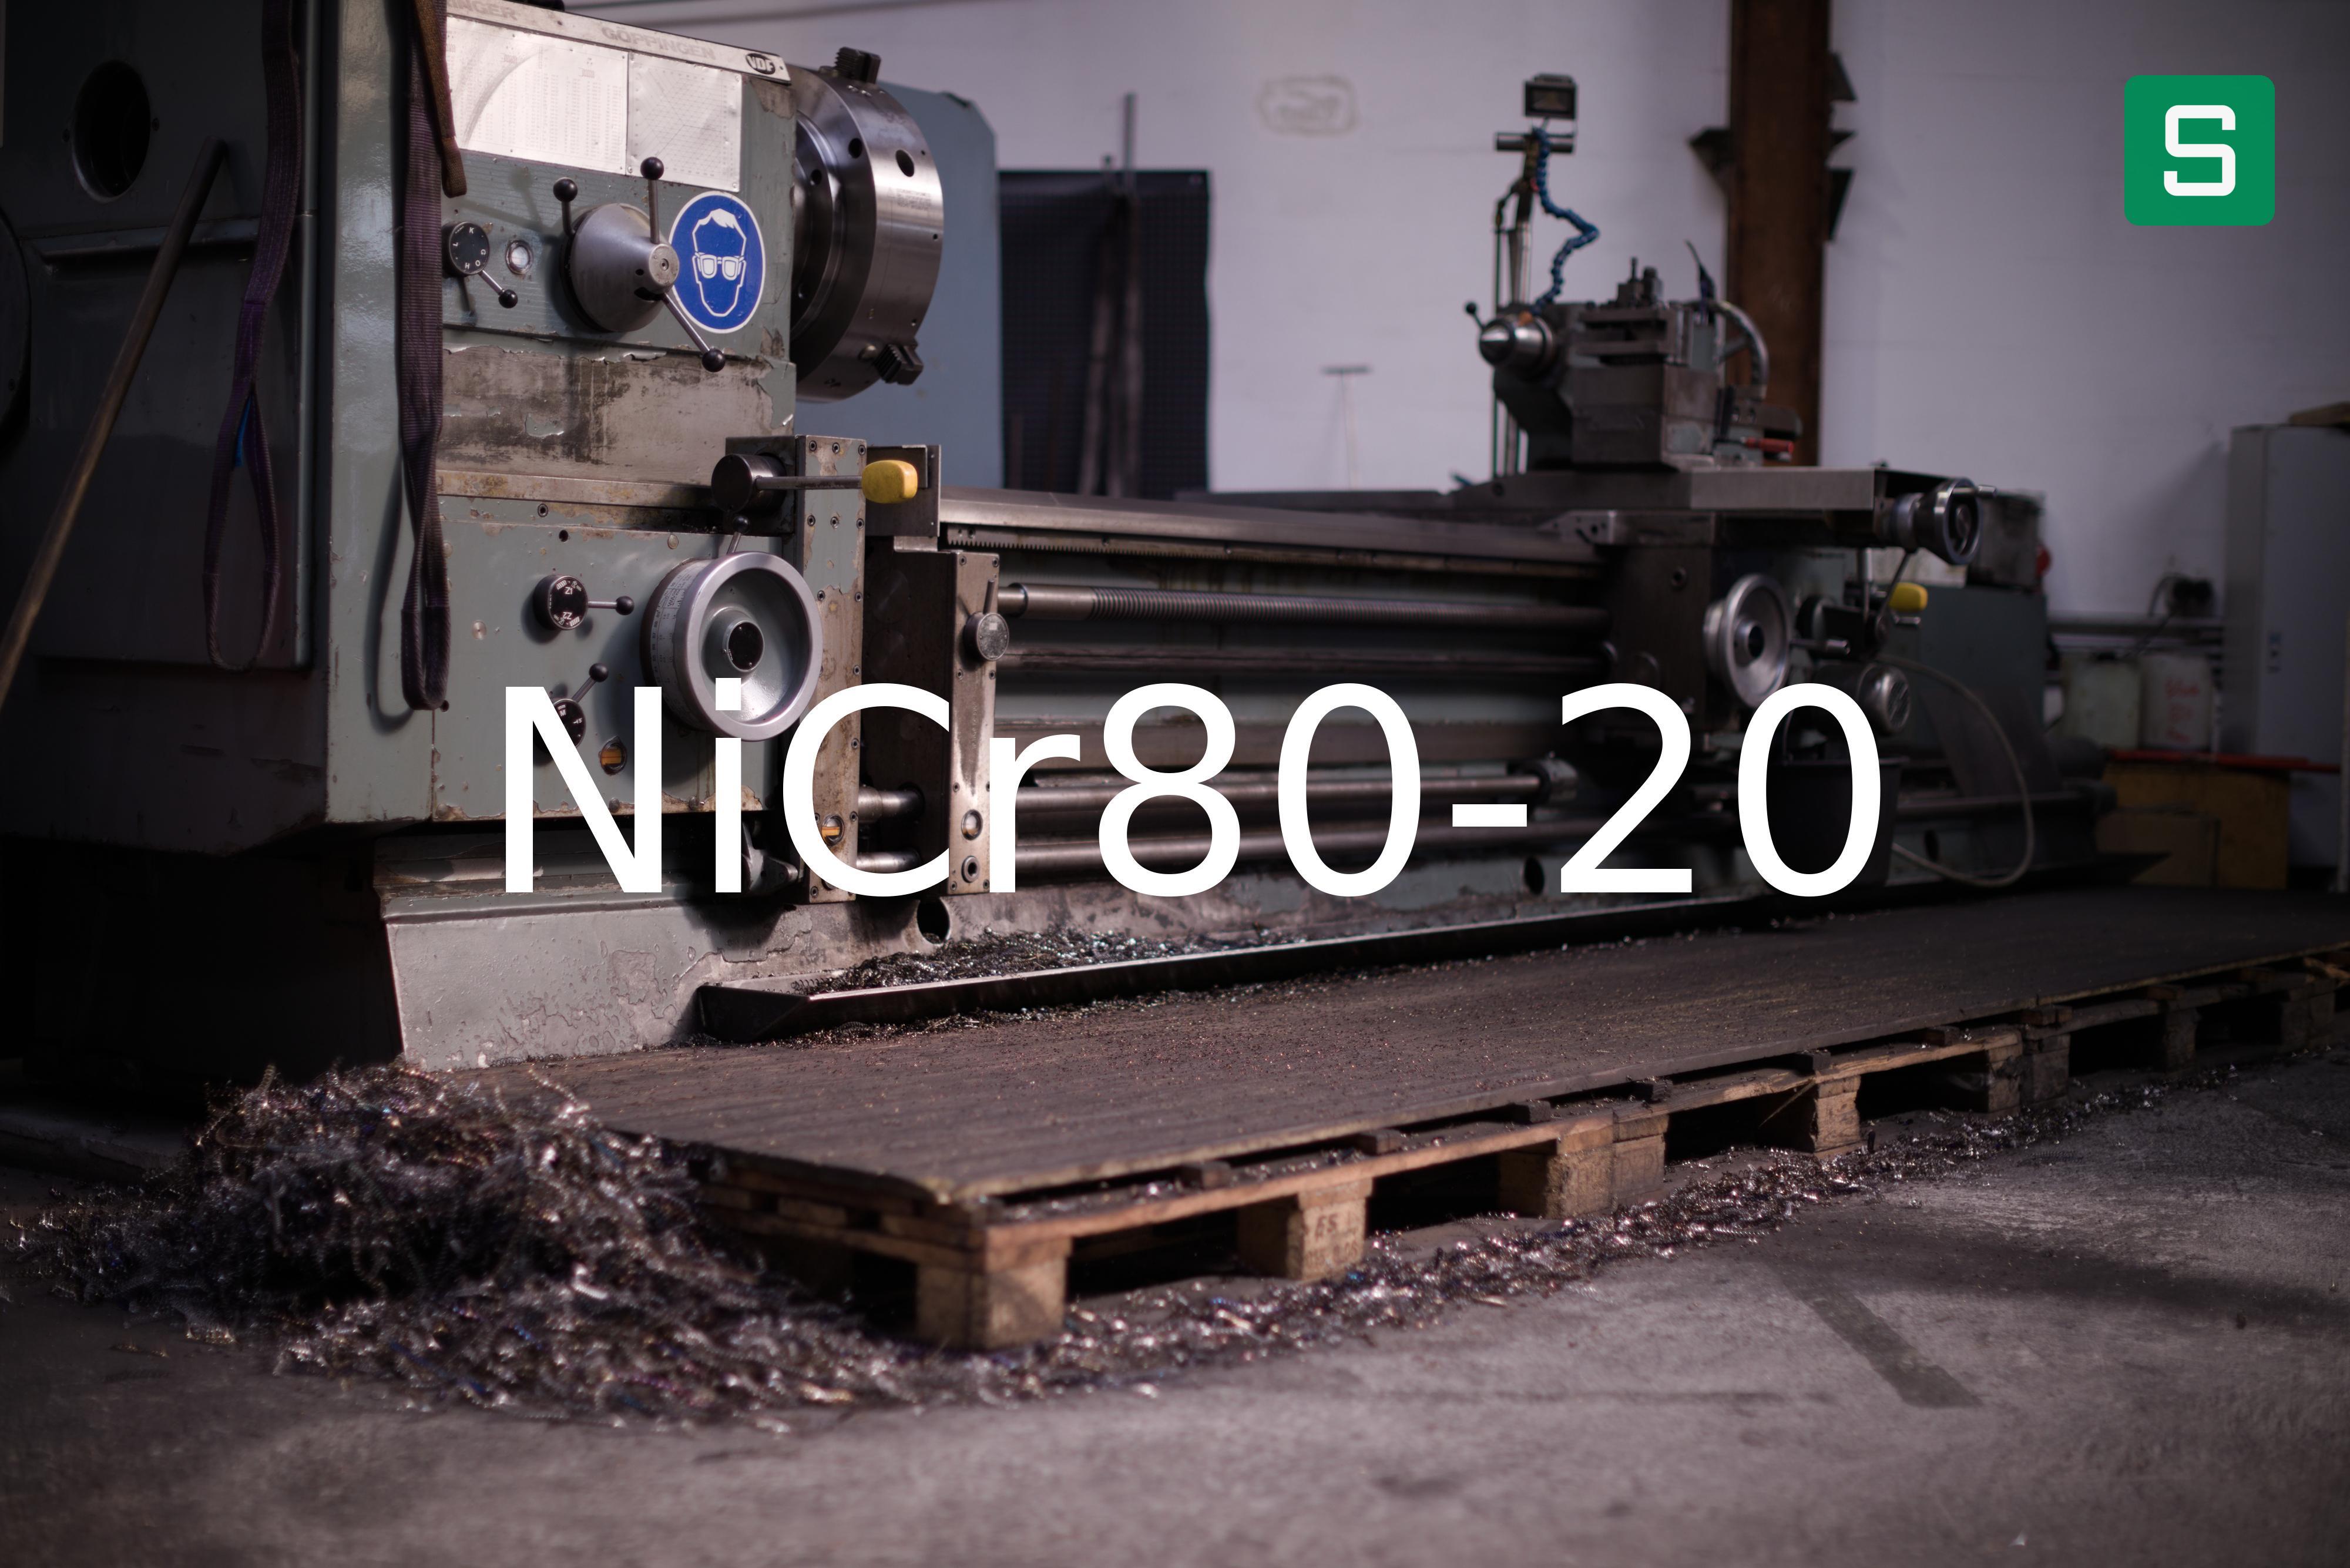 Steel Material: NiCr80-20